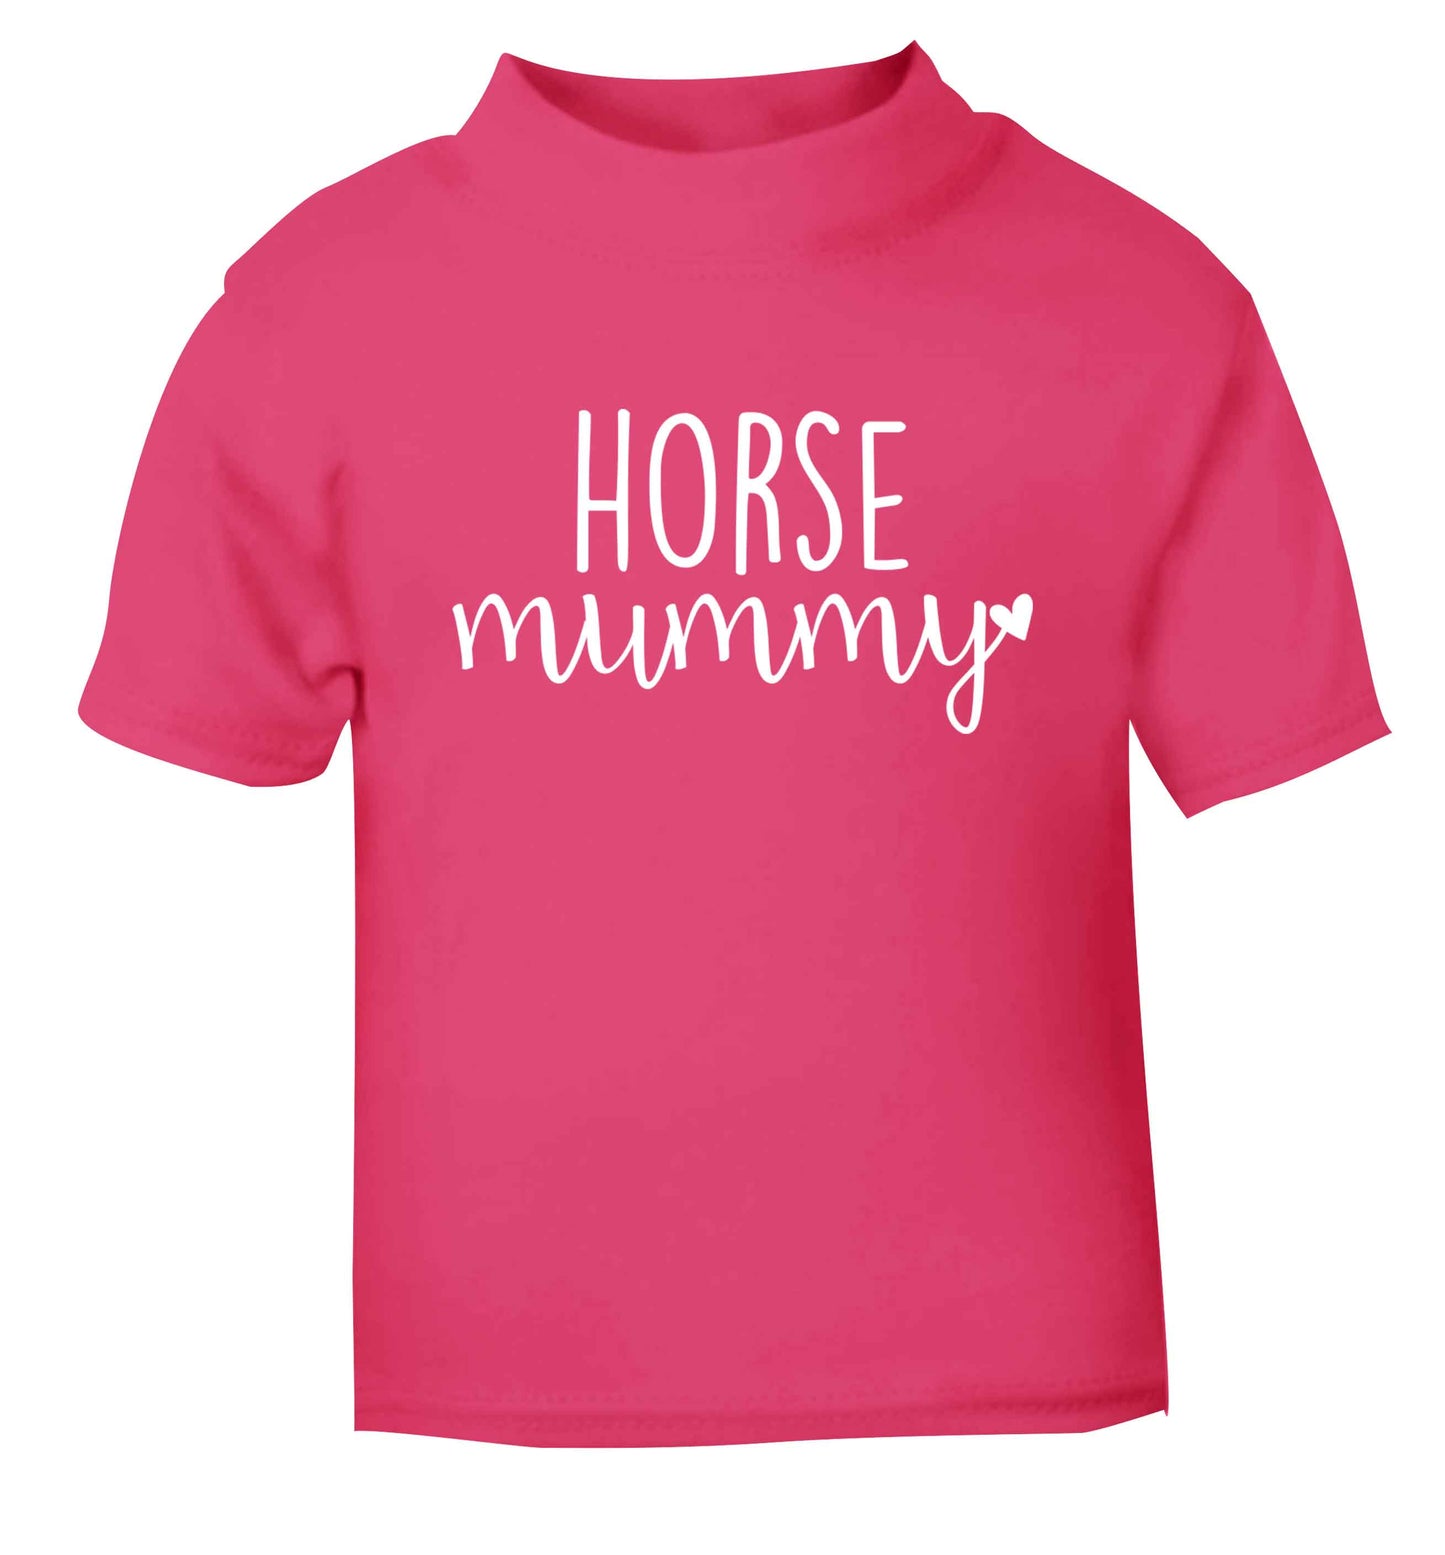 Horse mummy pink baby toddler Tshirt 2 Years